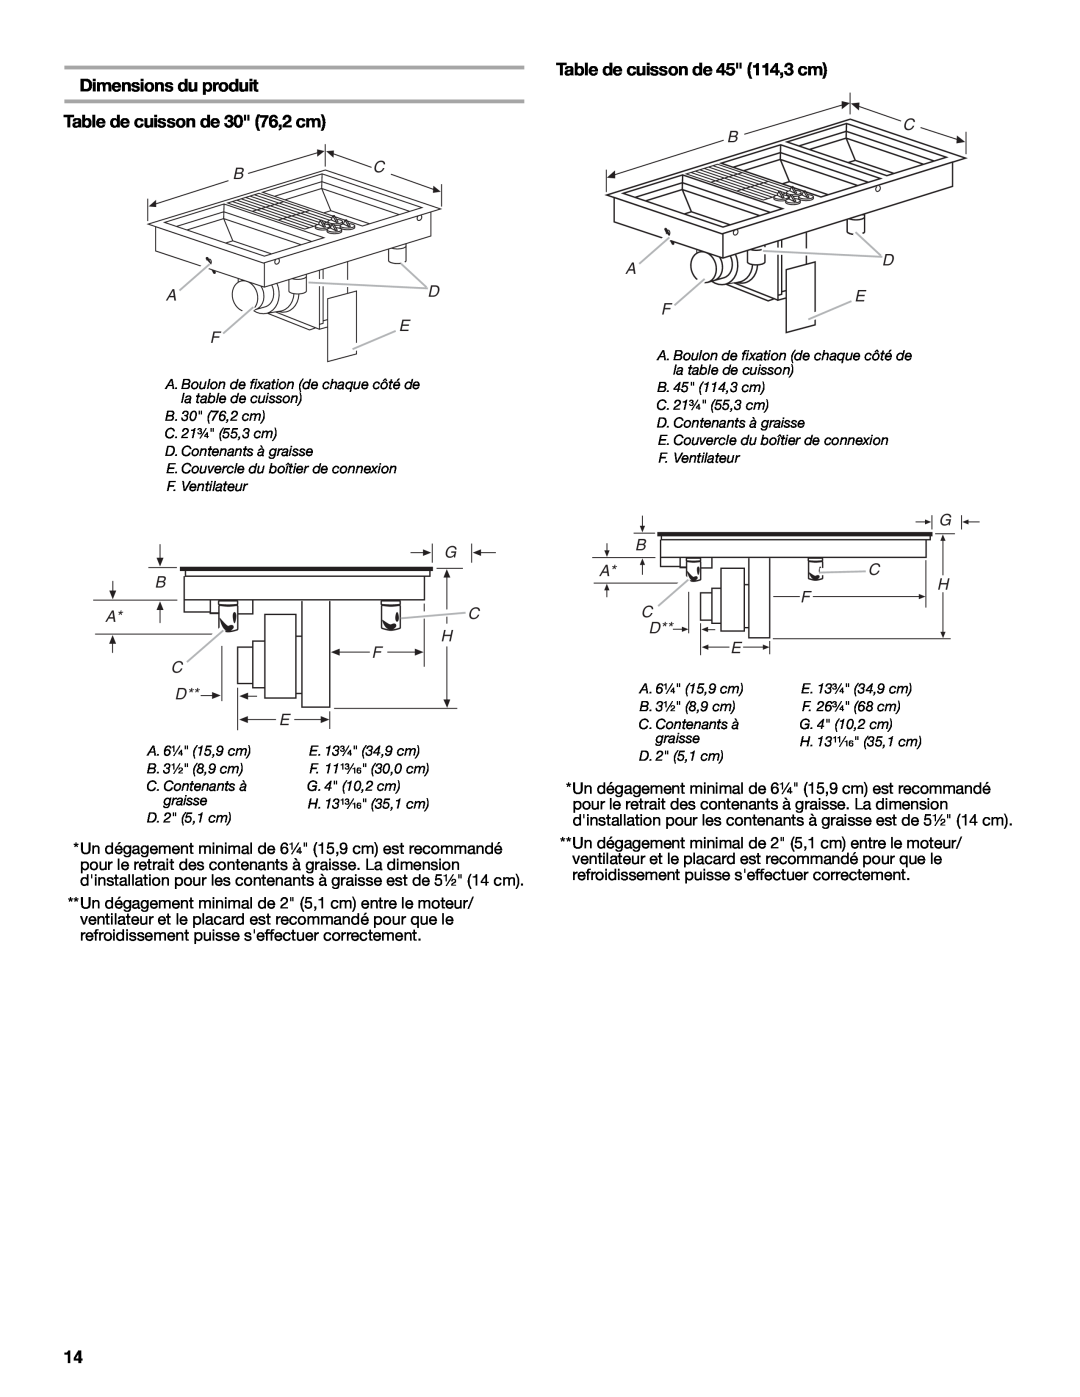 Jenn-Air W10298937B Dimensions du produit, Table de cuisson de 30 76,2 cm, Table de cuisson de 45 114,3 cm, Bc A D E F 